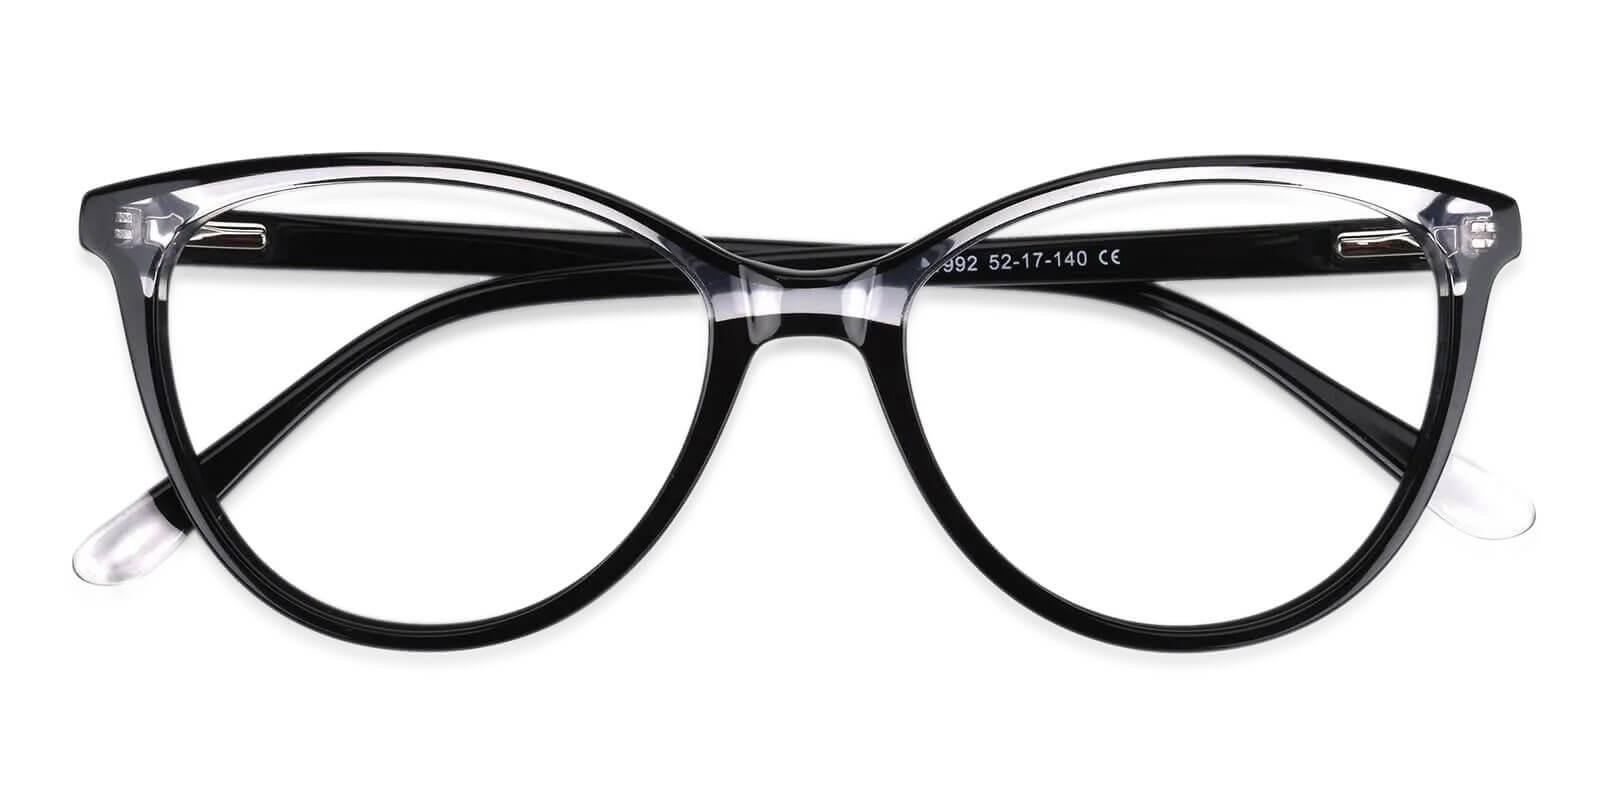 Magnus Black Acetate Eyeglasses , SpringHinges , UniversalBridgeFit Frames from ABBE Glasses